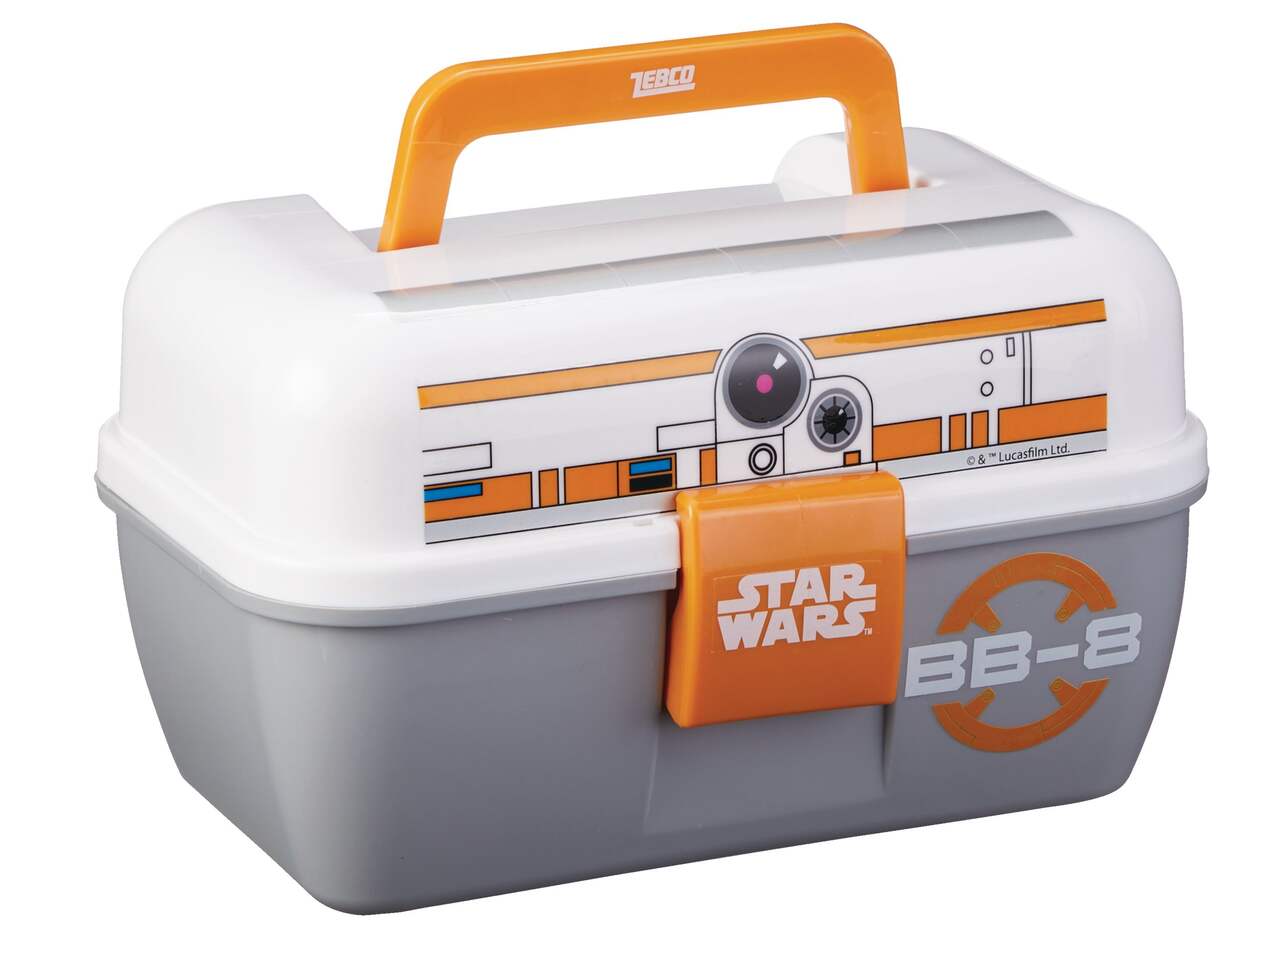 Zebco Star Wars Tackle Box, BB-8